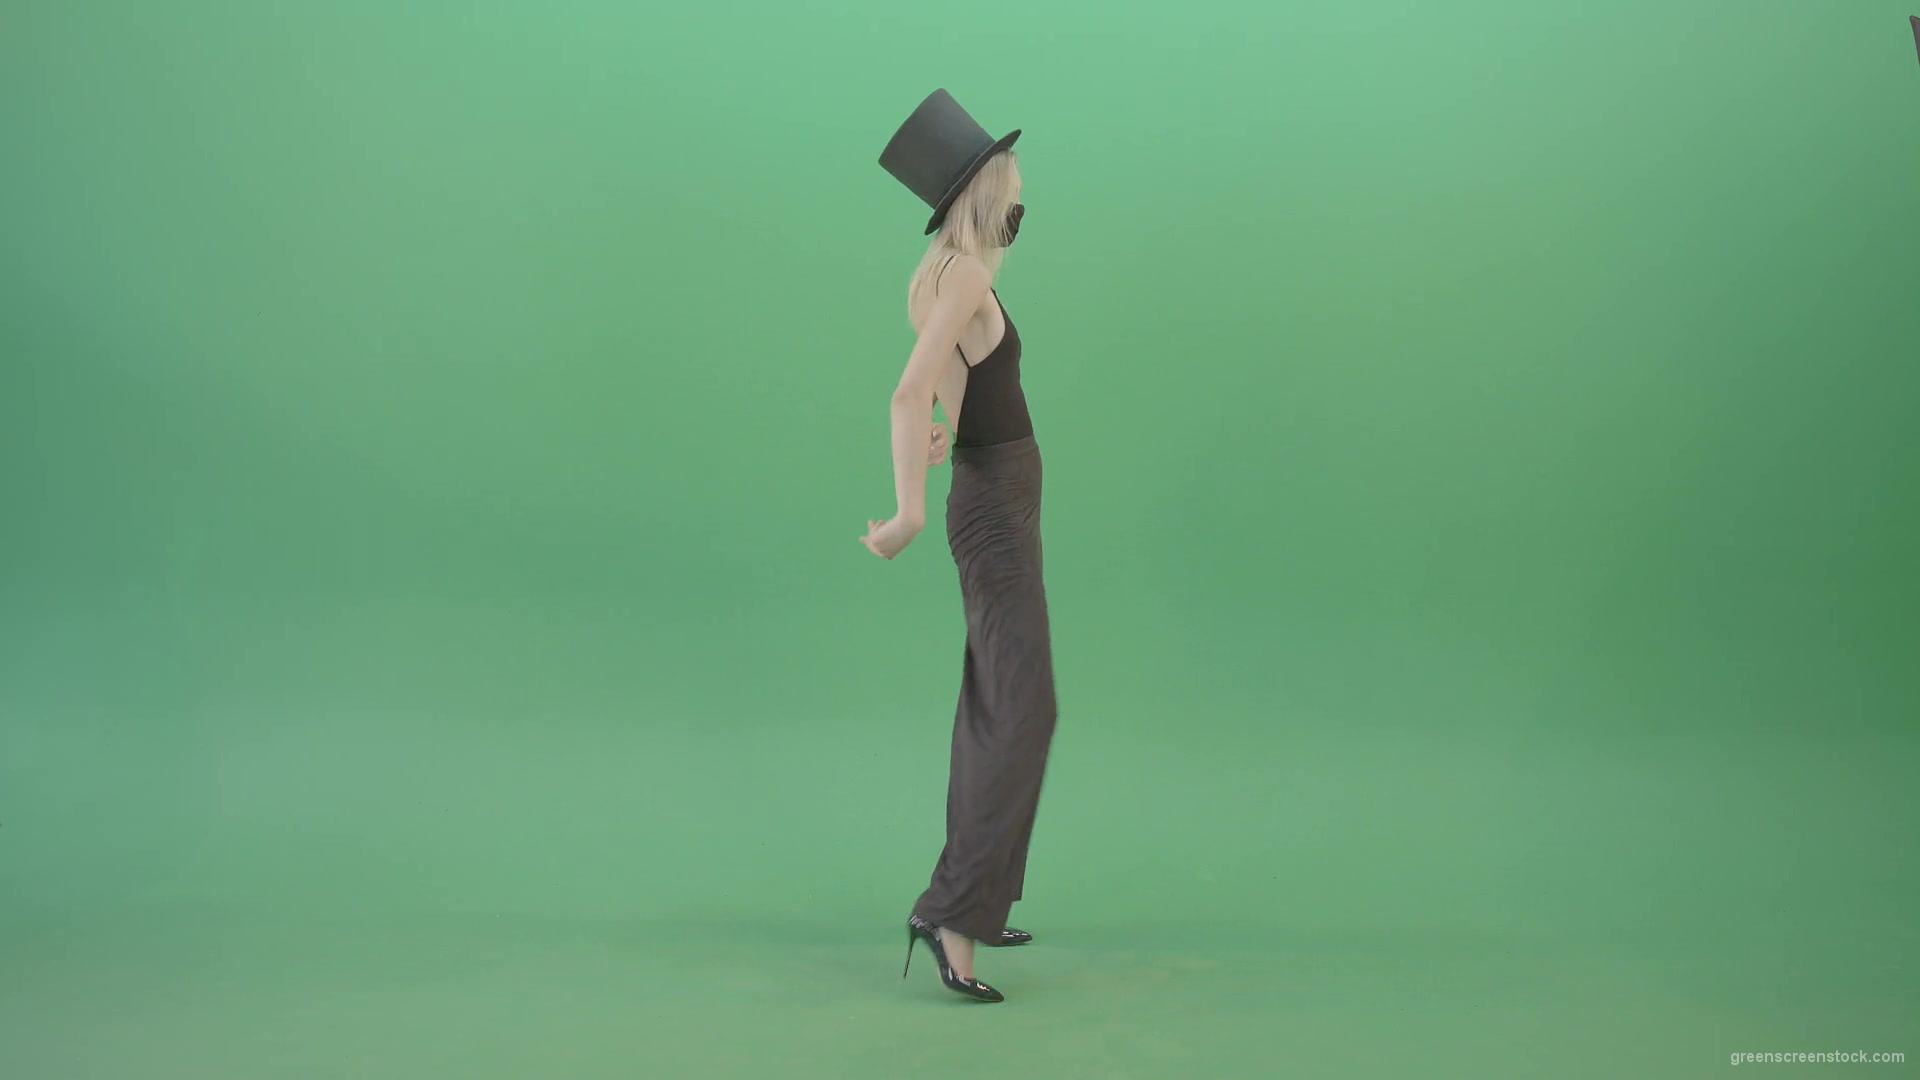 Blonde-Girl-in-Black-Cylinder-Hat-dancing-slowly-in-Corona-VIrus-Mask-on-green-screen-VIdeo-Footage-1920_005 Green Screen Stock